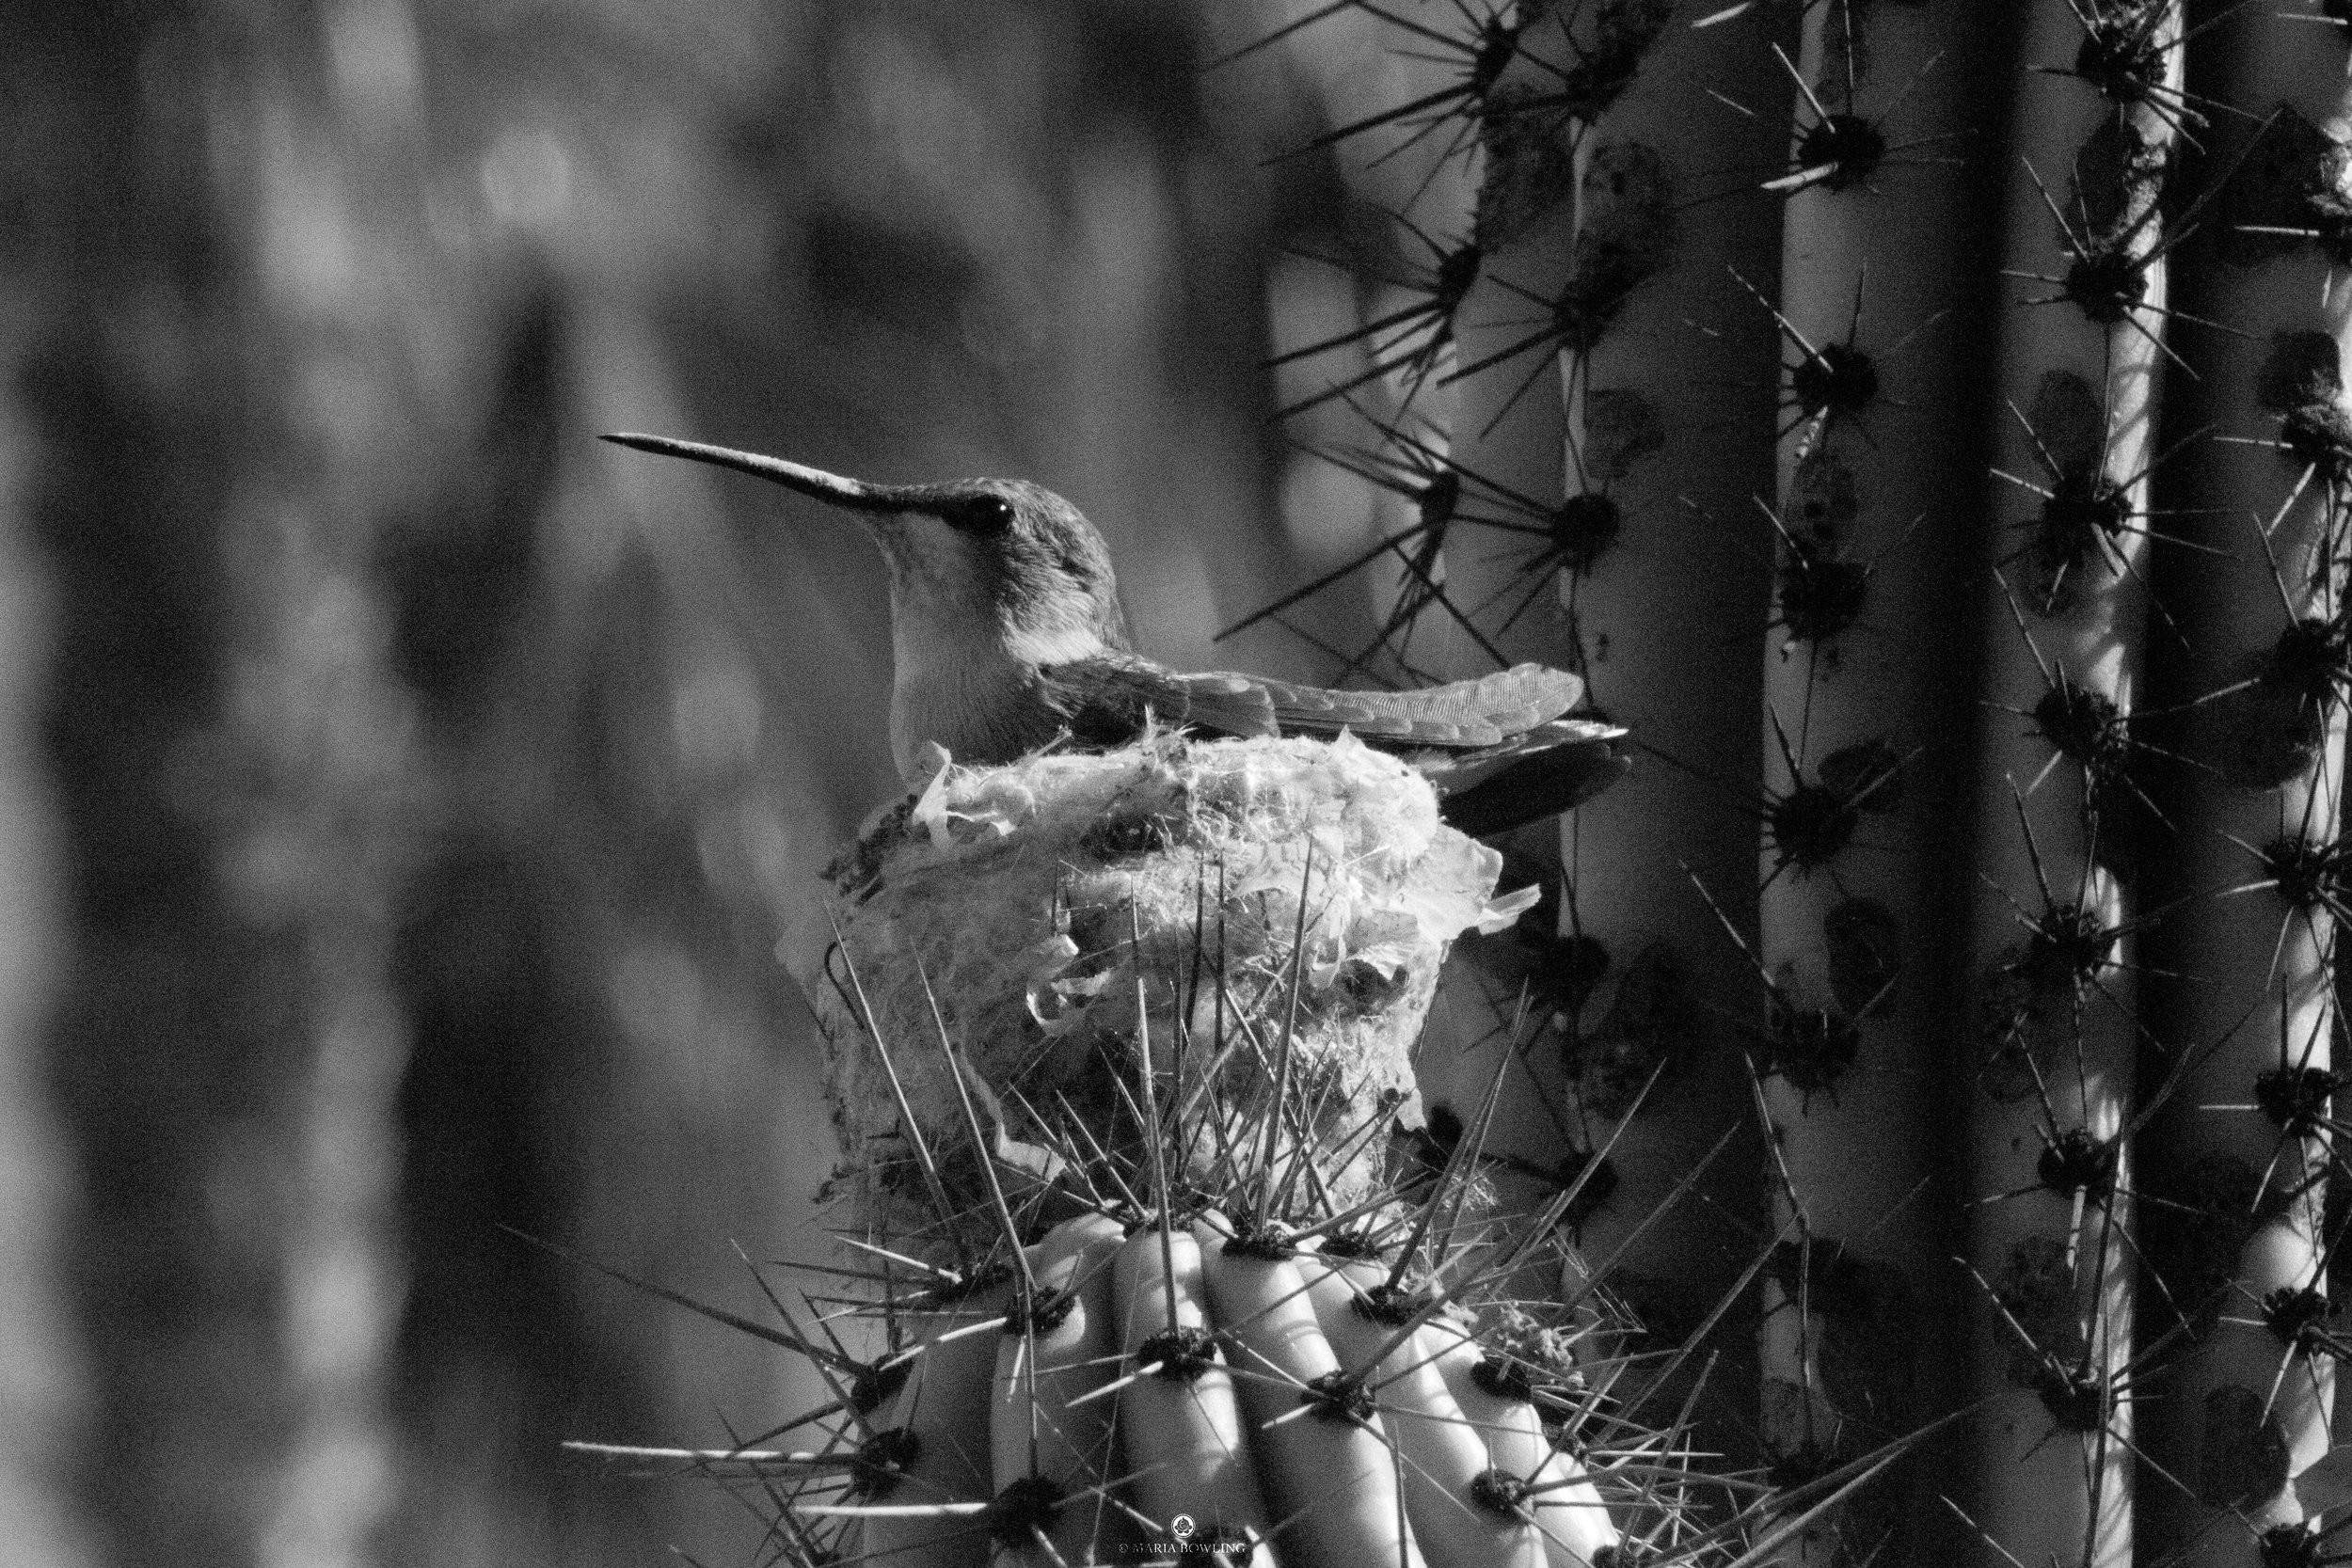  Hummingbird. Baja, Mexico.&nbsp; 